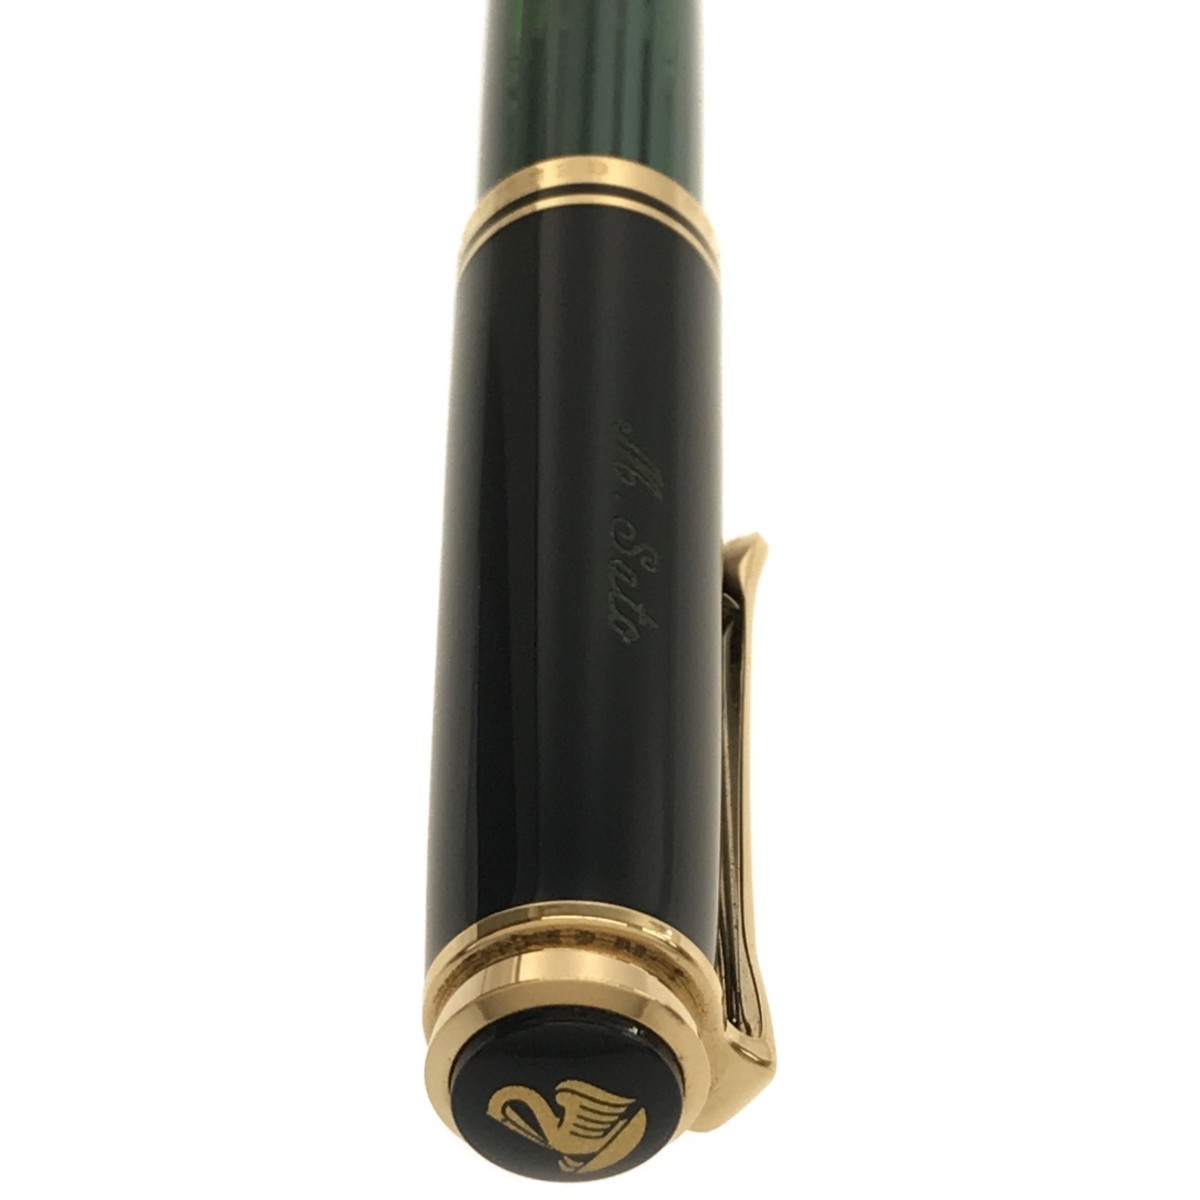 PELIKAN Souveran M400 ペリカン スーベレーン 万年筆 ブラック × ゴールド 緑縞 ペン先14C 585 F 刻印 筆記用具 ドイツ製 文房具 J825 - 8